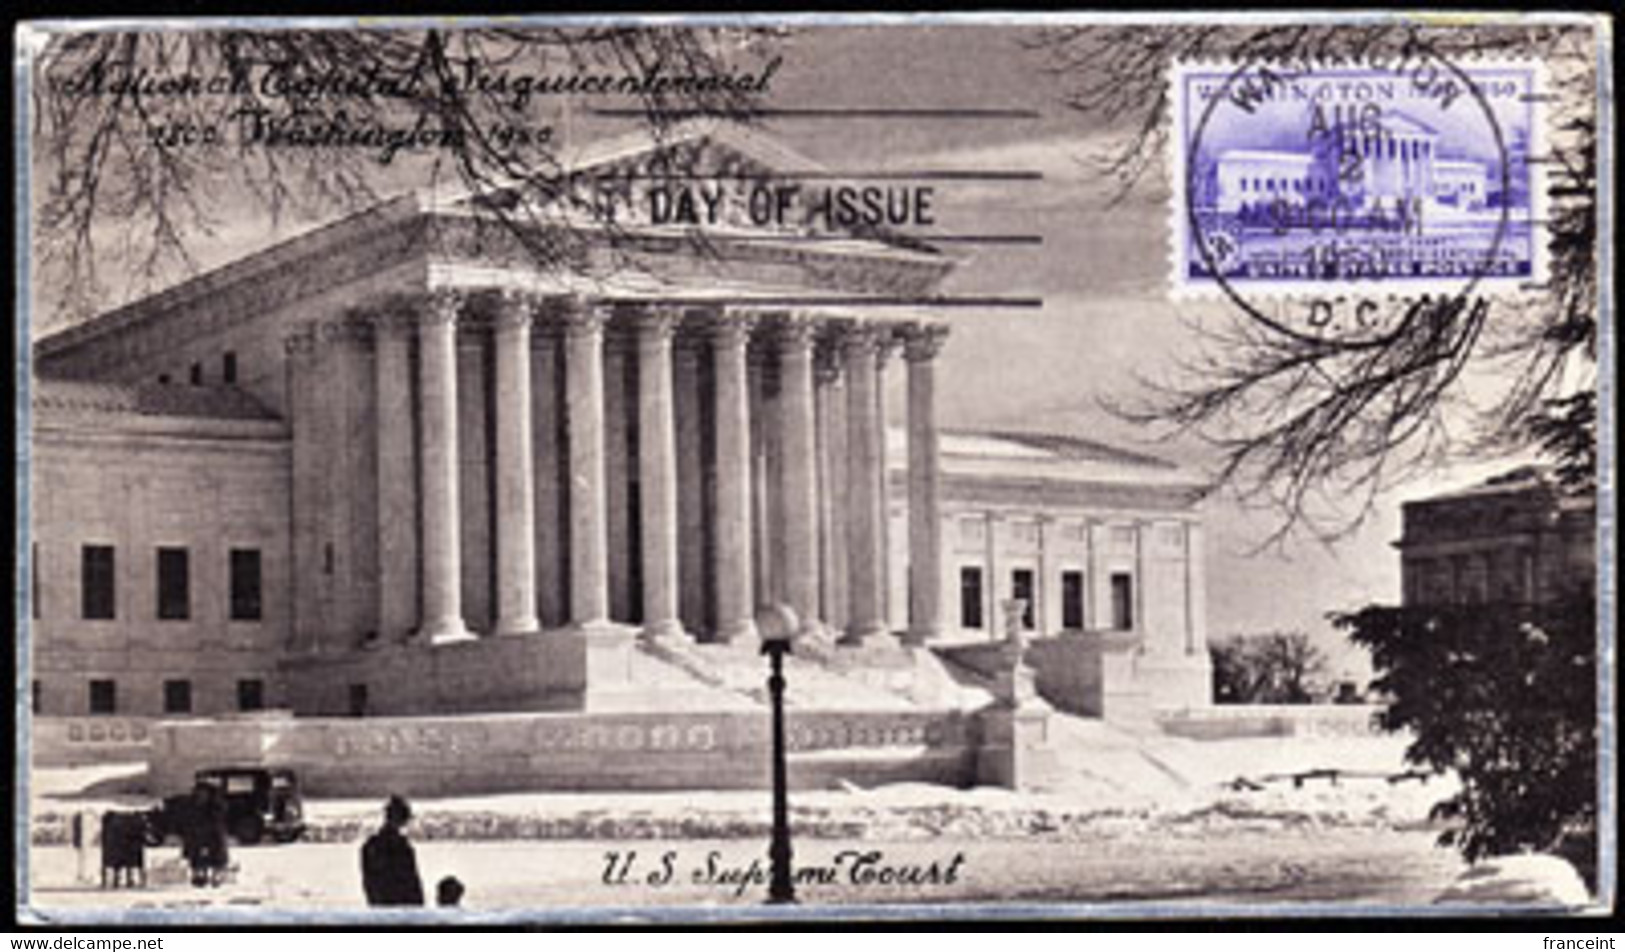 U.S.A. (1950) Supreme Court. Maximum Card With First Day Cancel. Scott No 991, Yvert No 543. - Maximum Cards